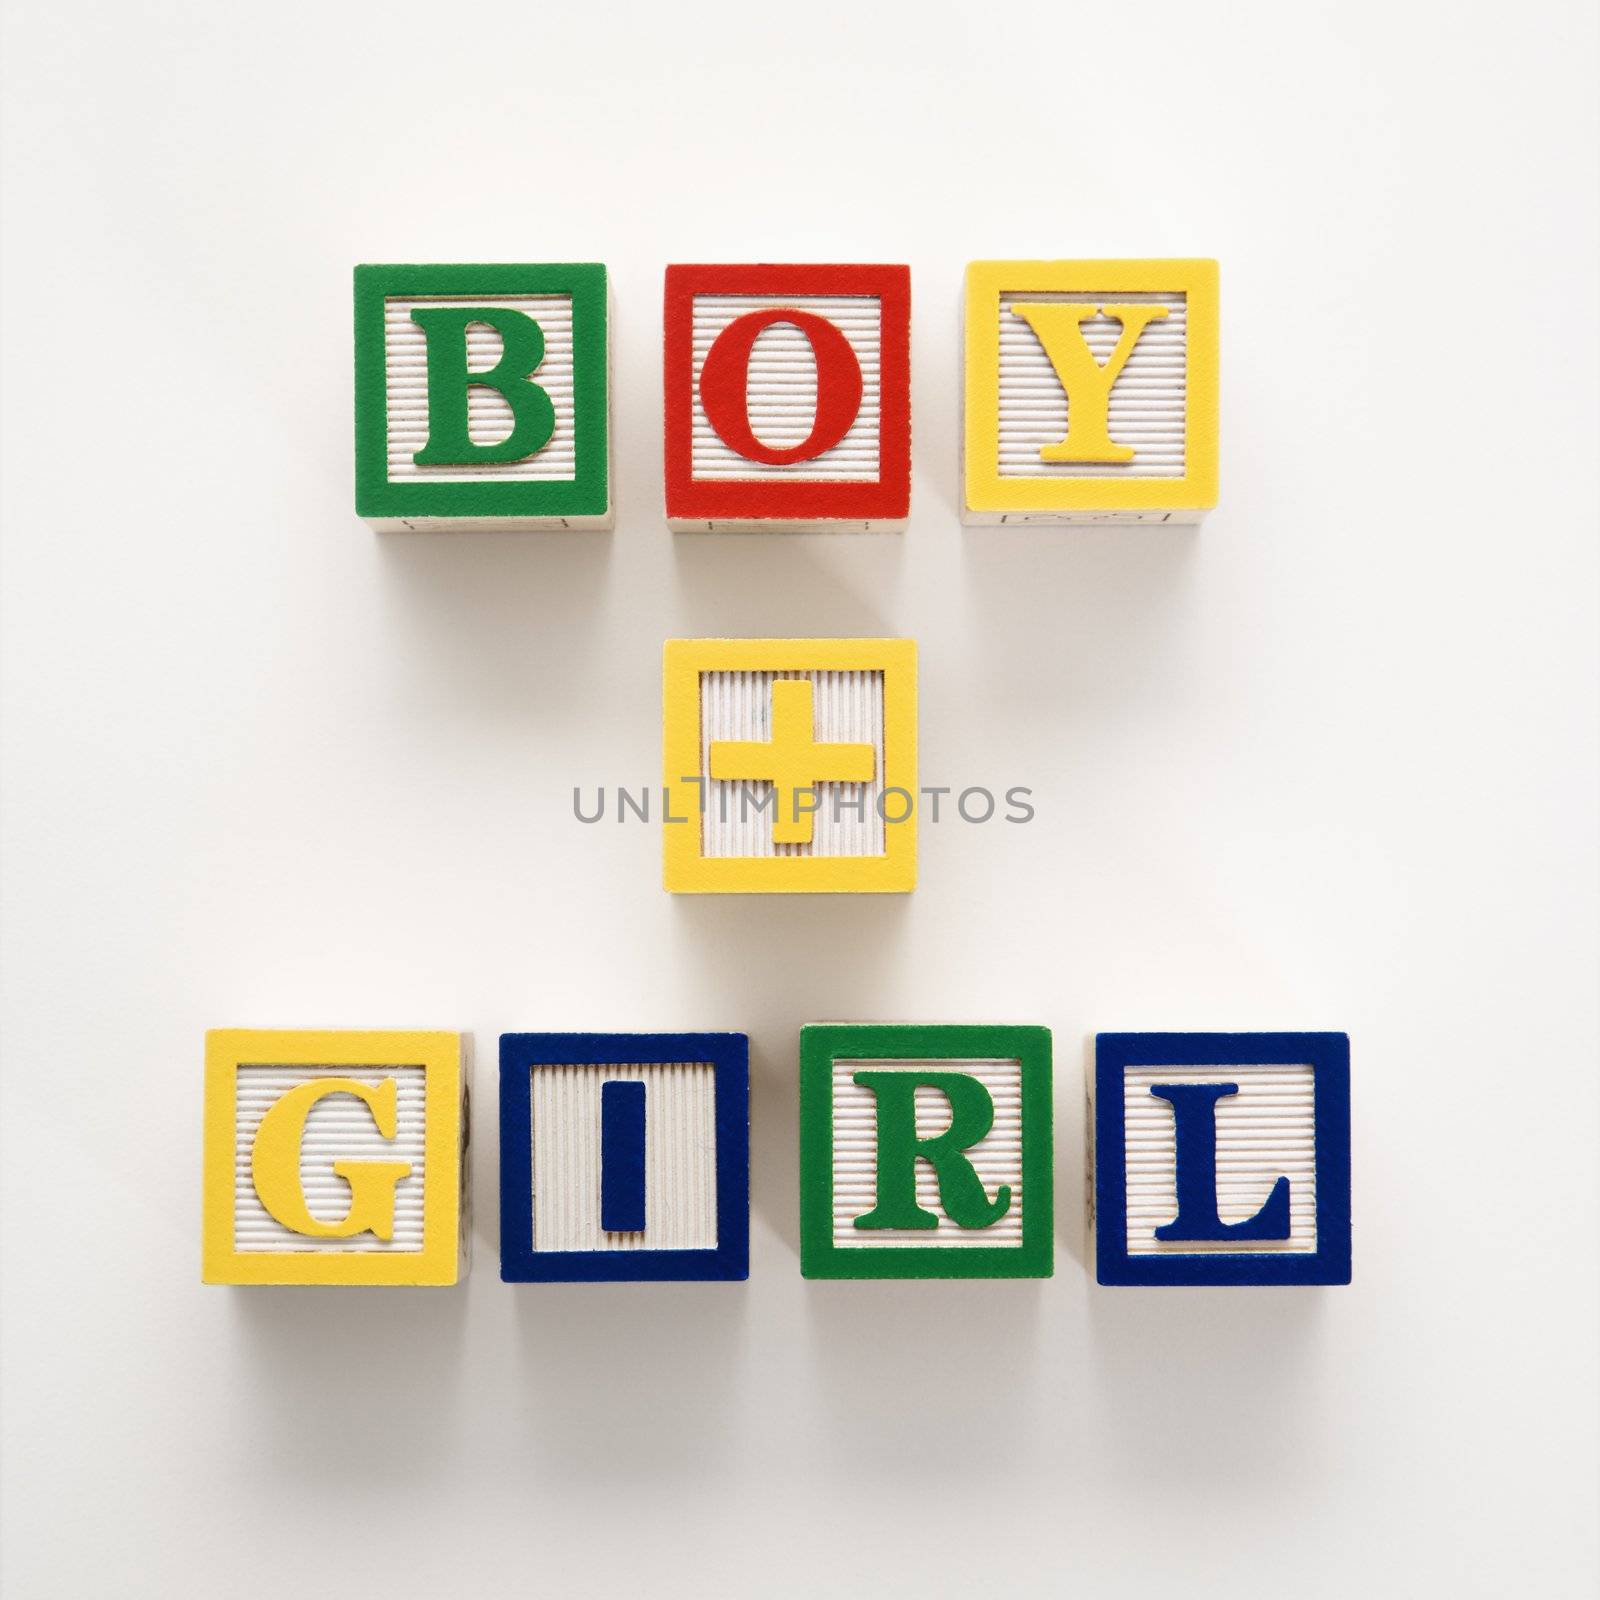 Alphabet toy building blocks spelling the words boy plus girl.